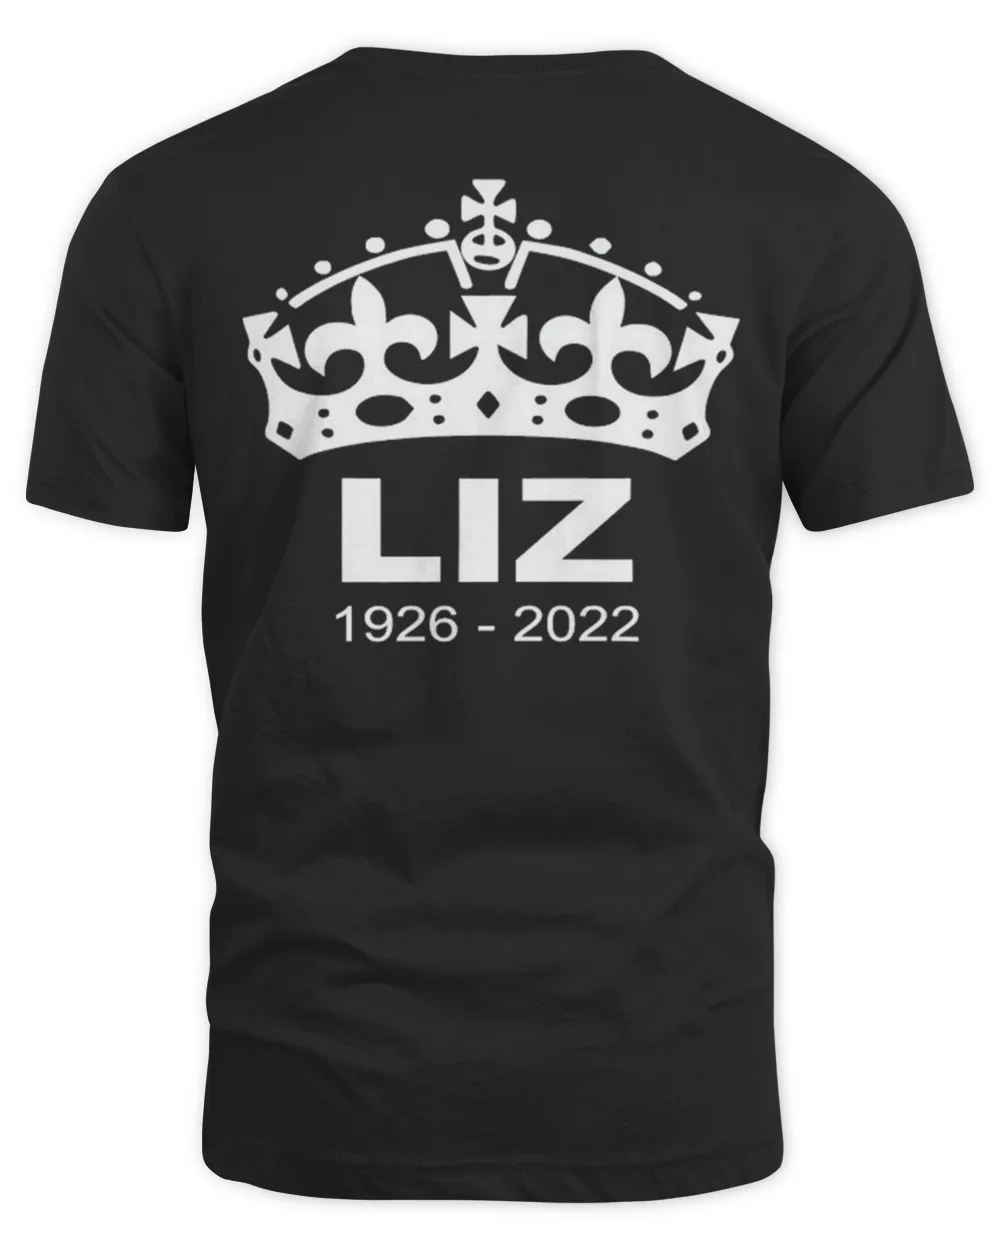 Liz Rest In Peace Elizabeth II 1926-2022 Shirt Unisex Standard T-Shirt black xl